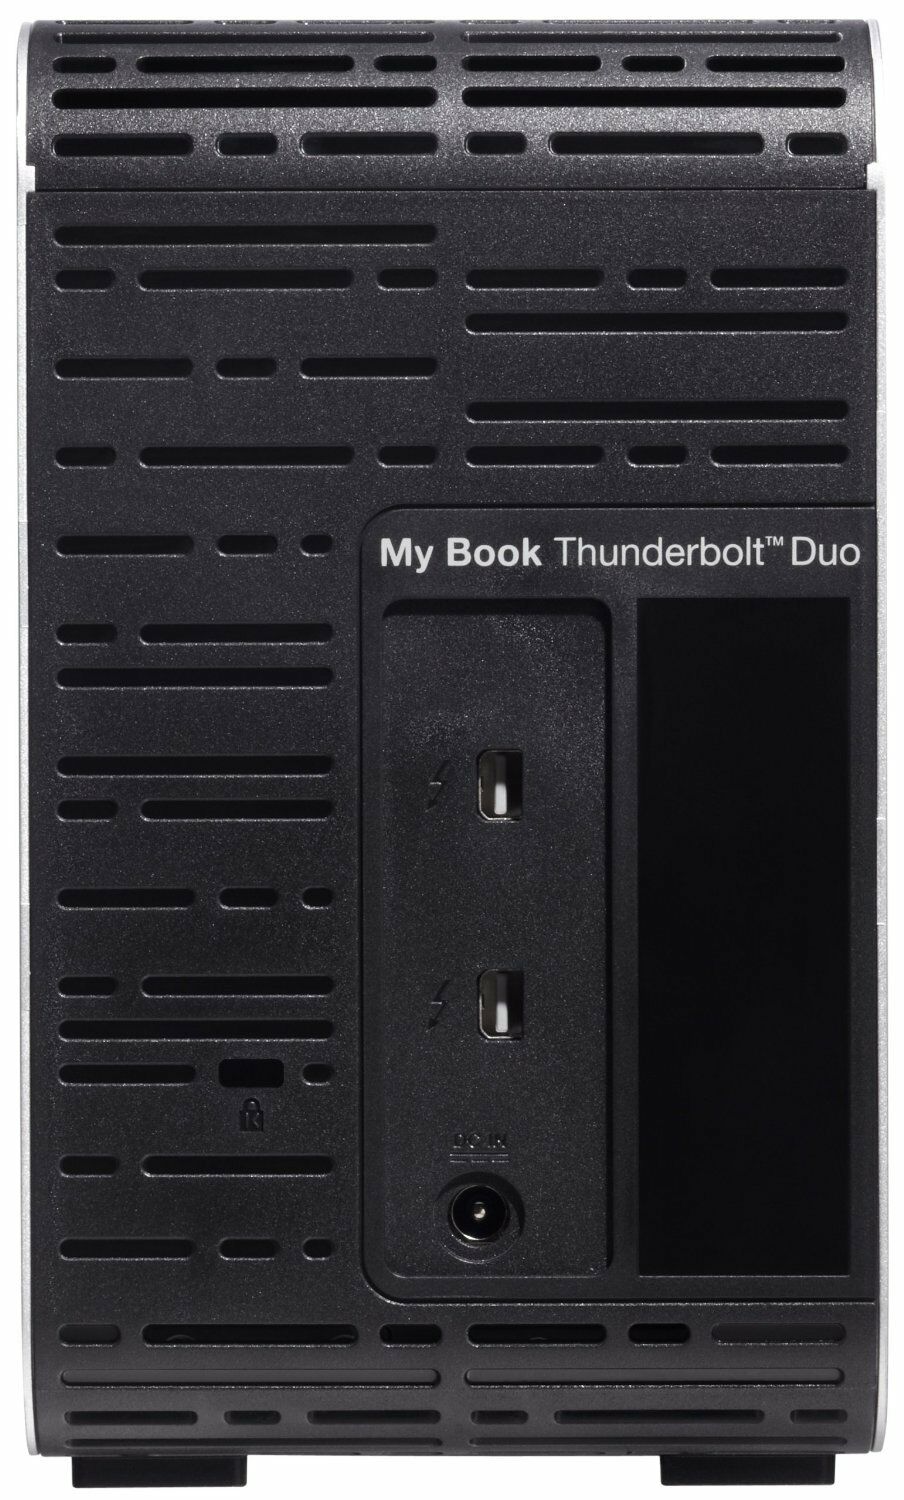 WD My Book 4TB RAID Thunderbolt Duo Dual-Drive External Hard Drive WDBUSK0040JSL